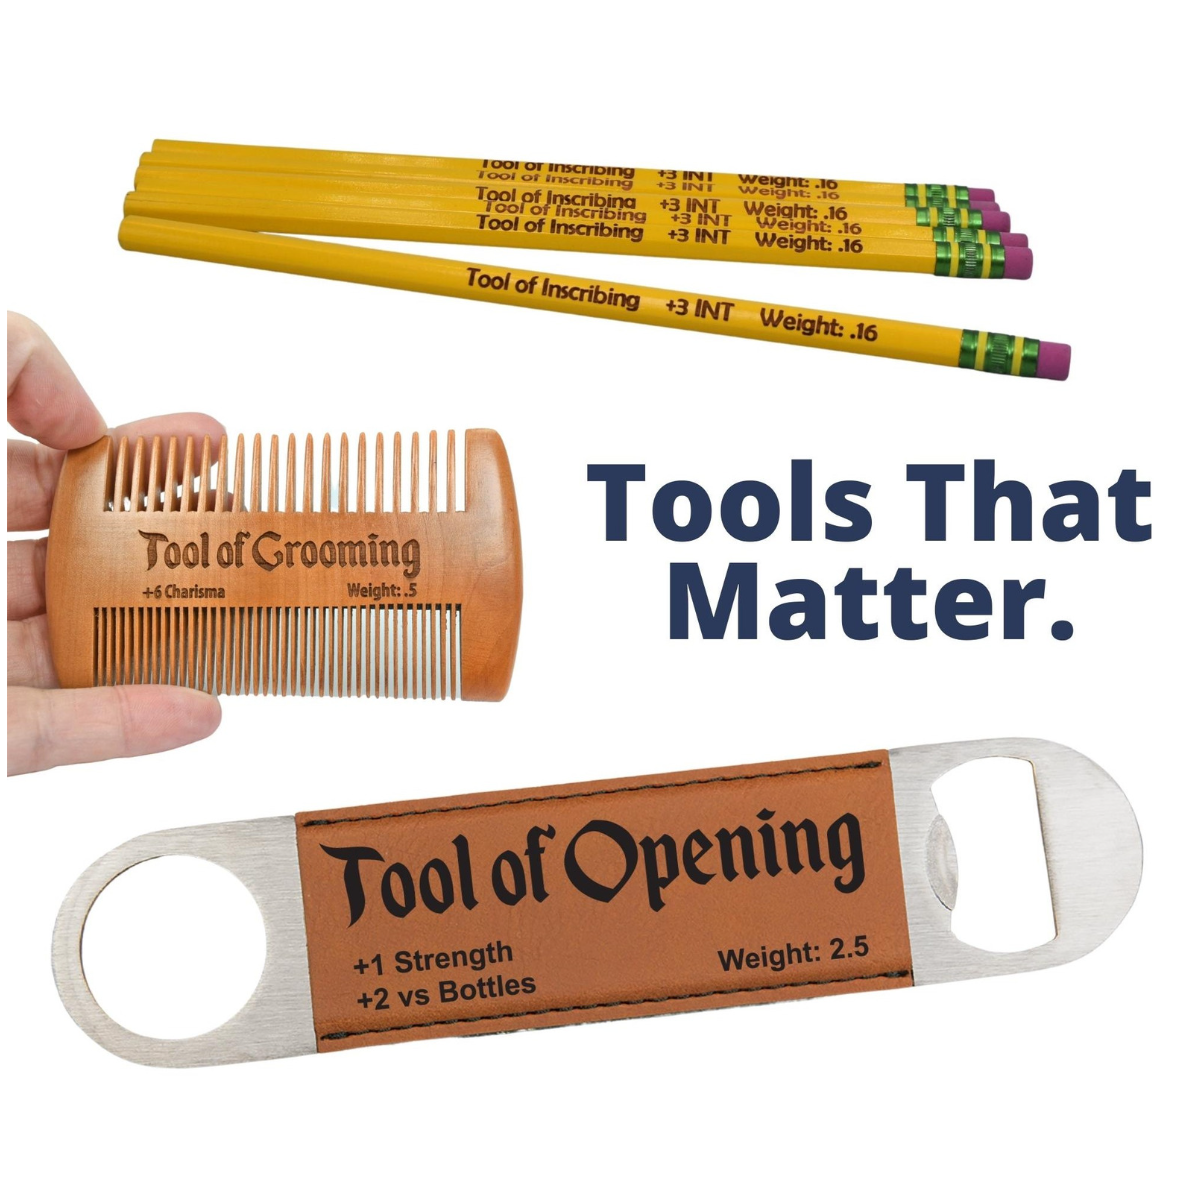 Tools that Matter